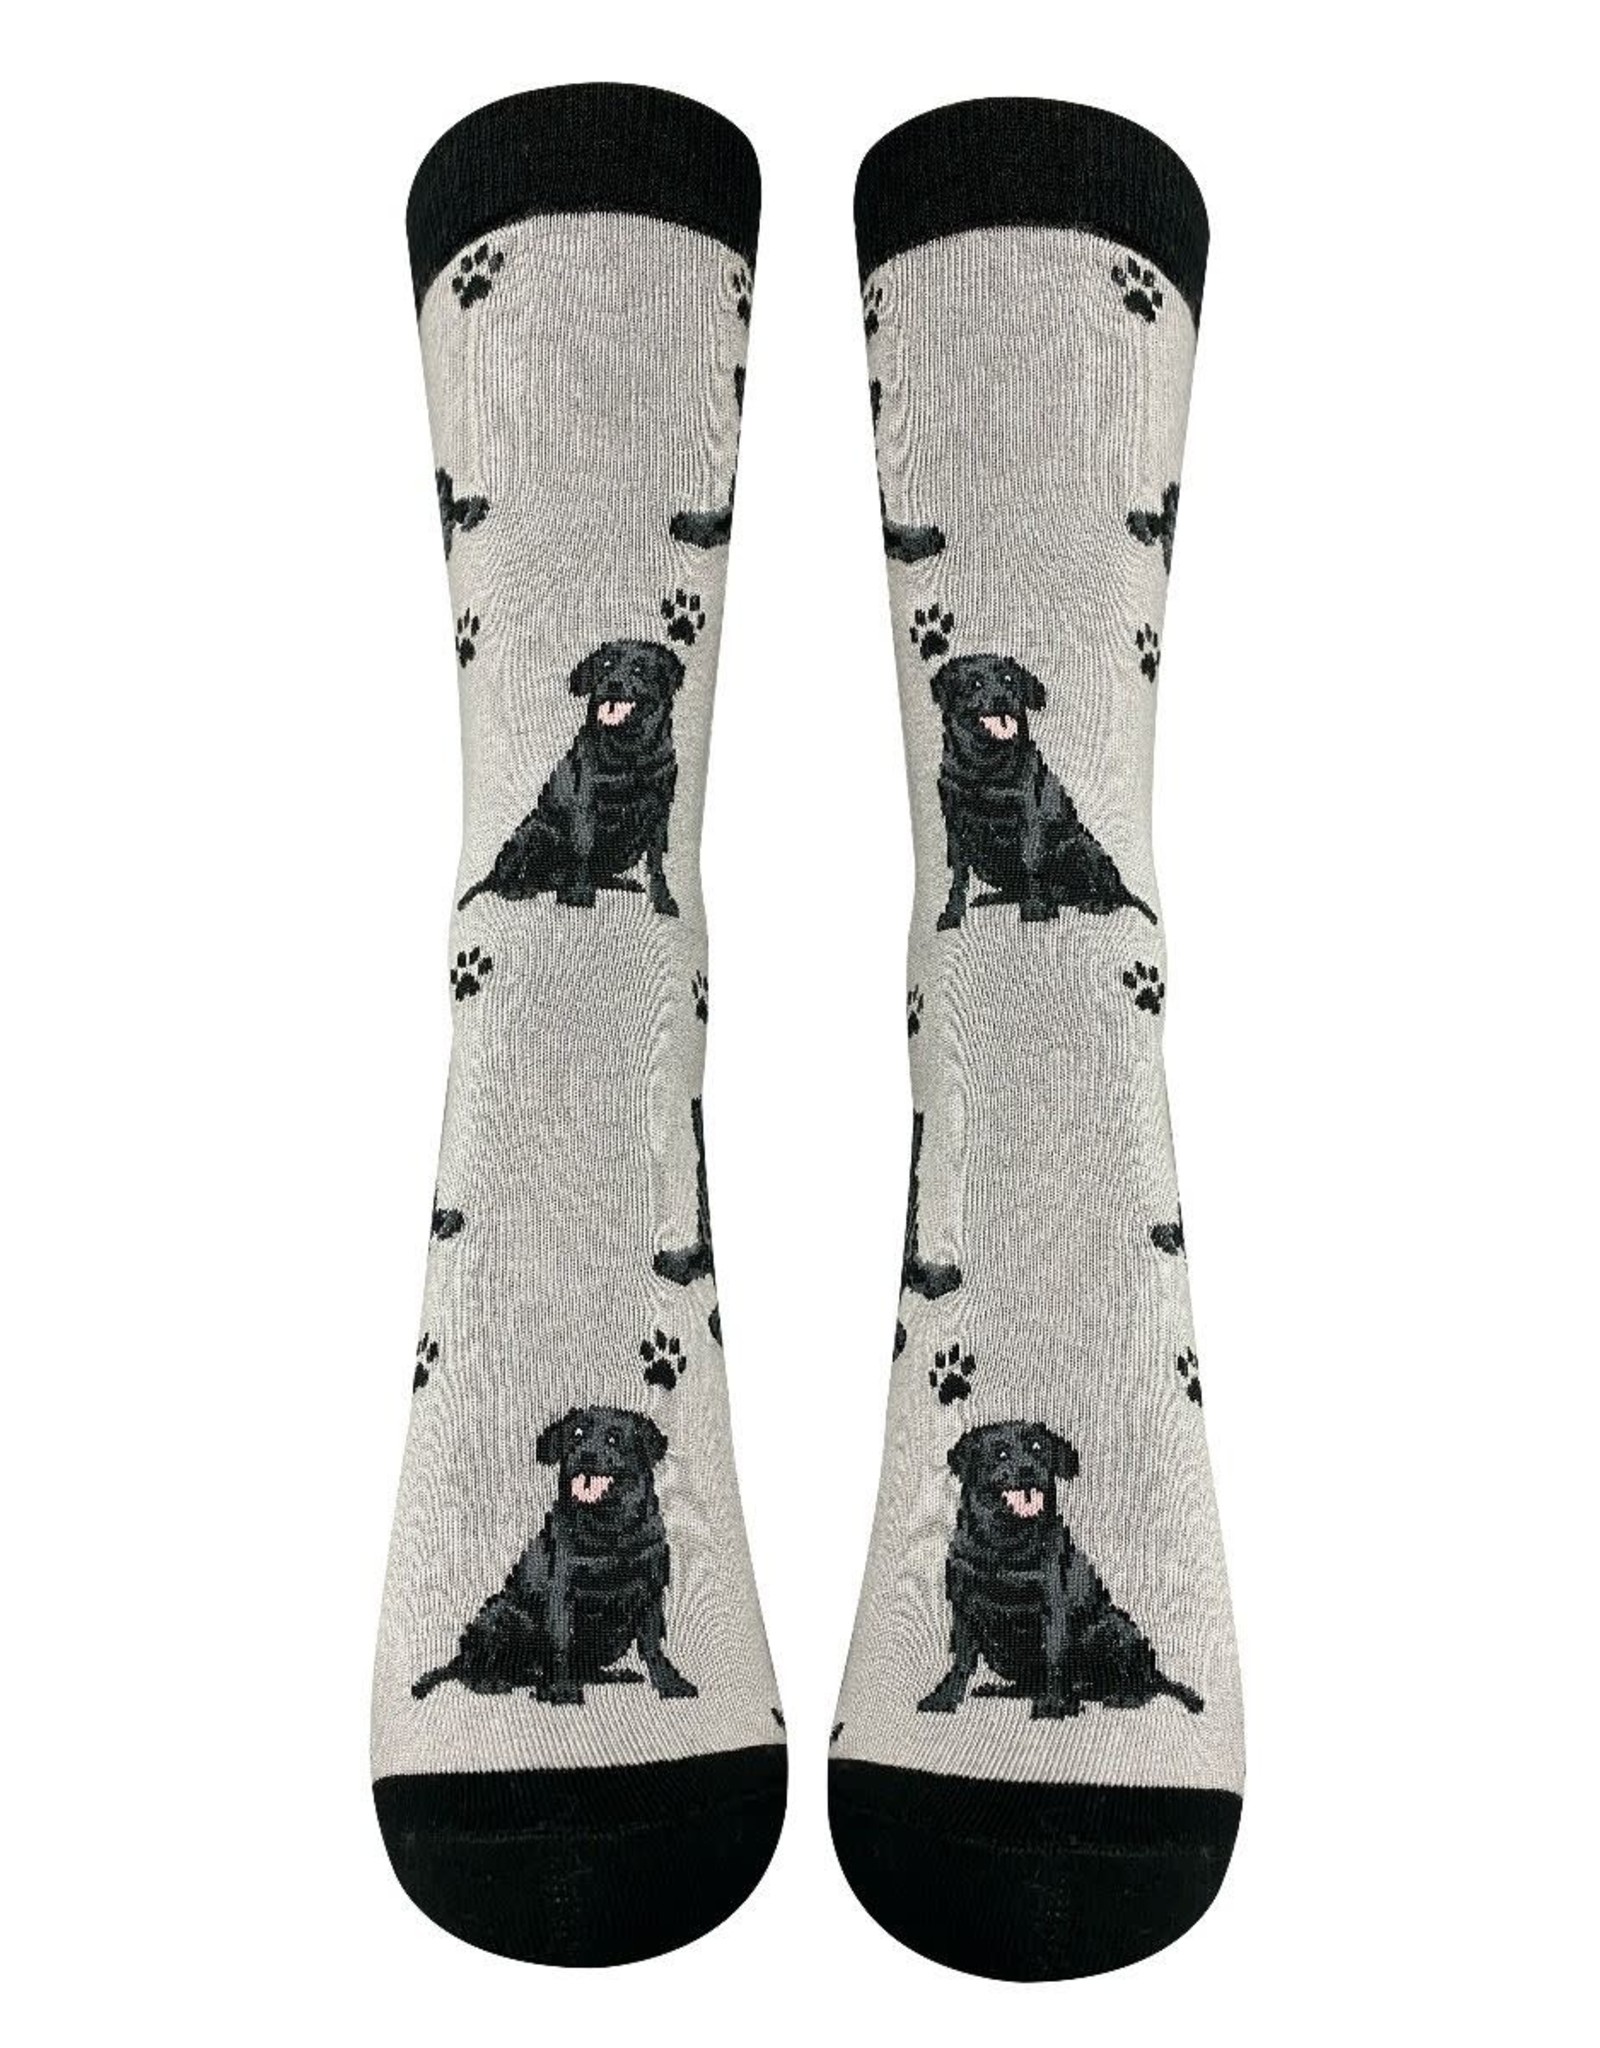 E&S Pets Full Body Black Labrador Socks